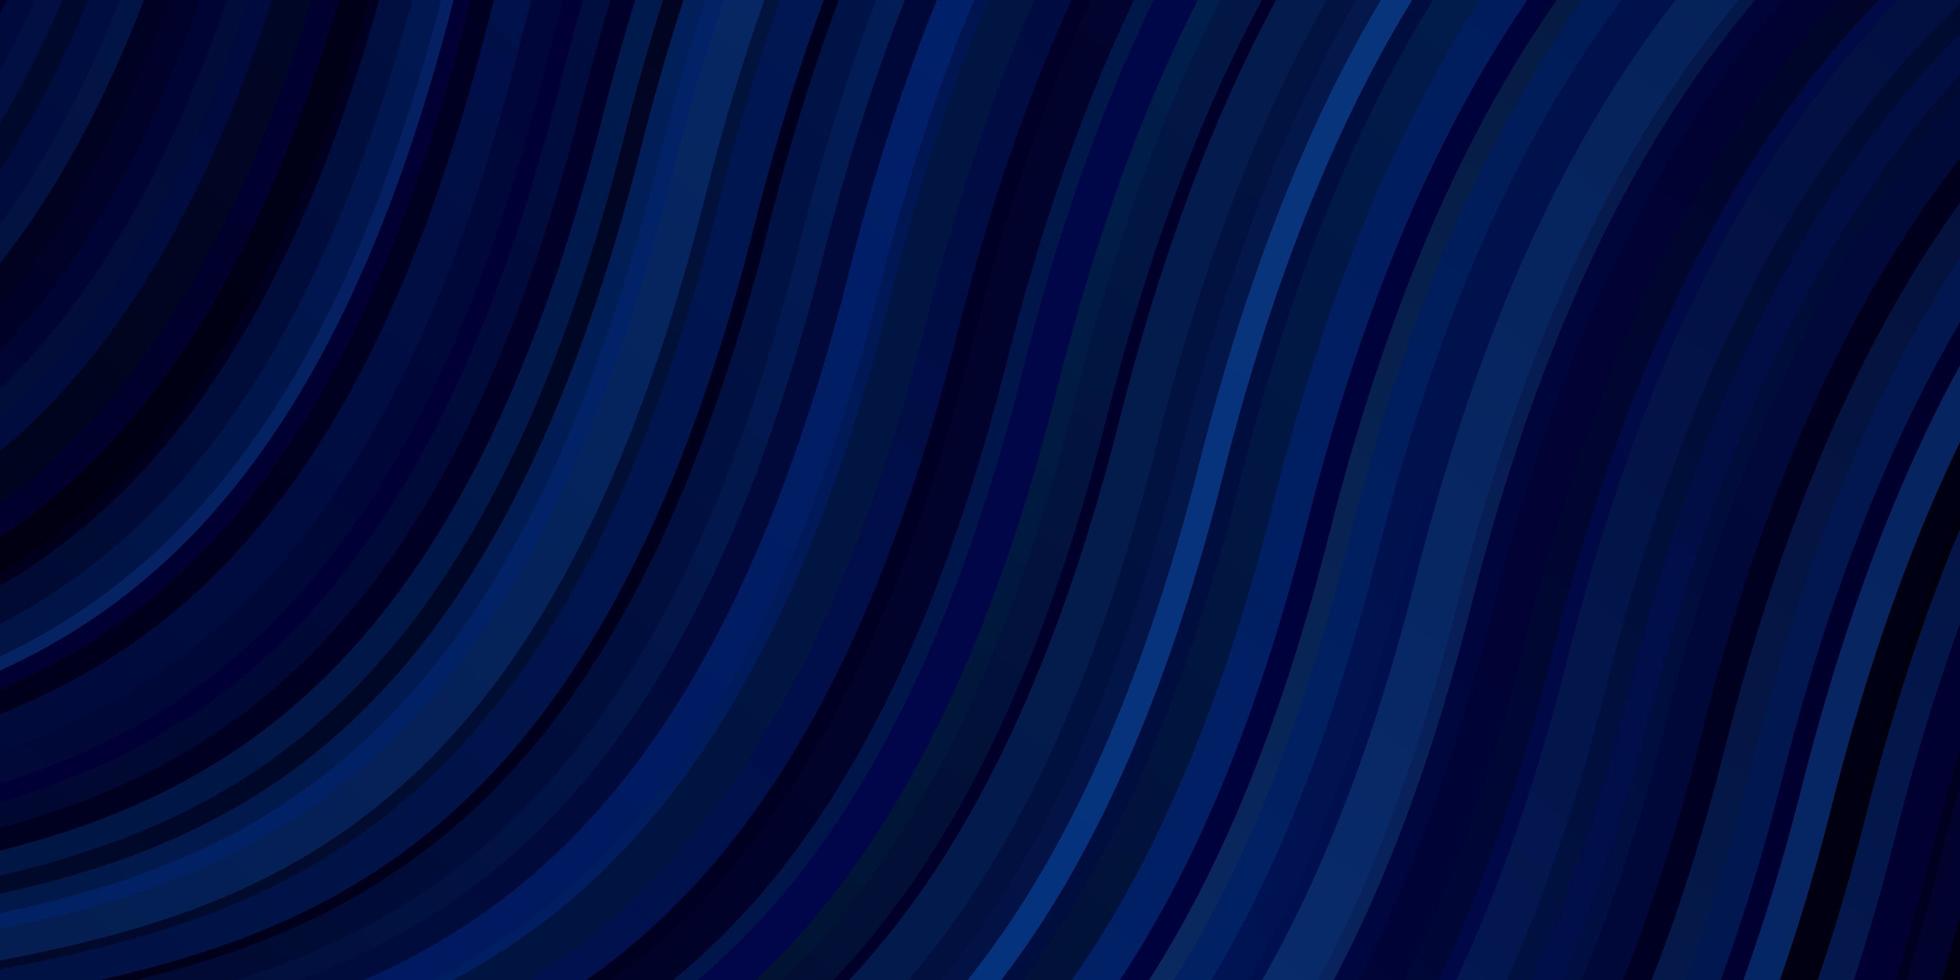 plantilla de vector azul claro con líneas torcidas.